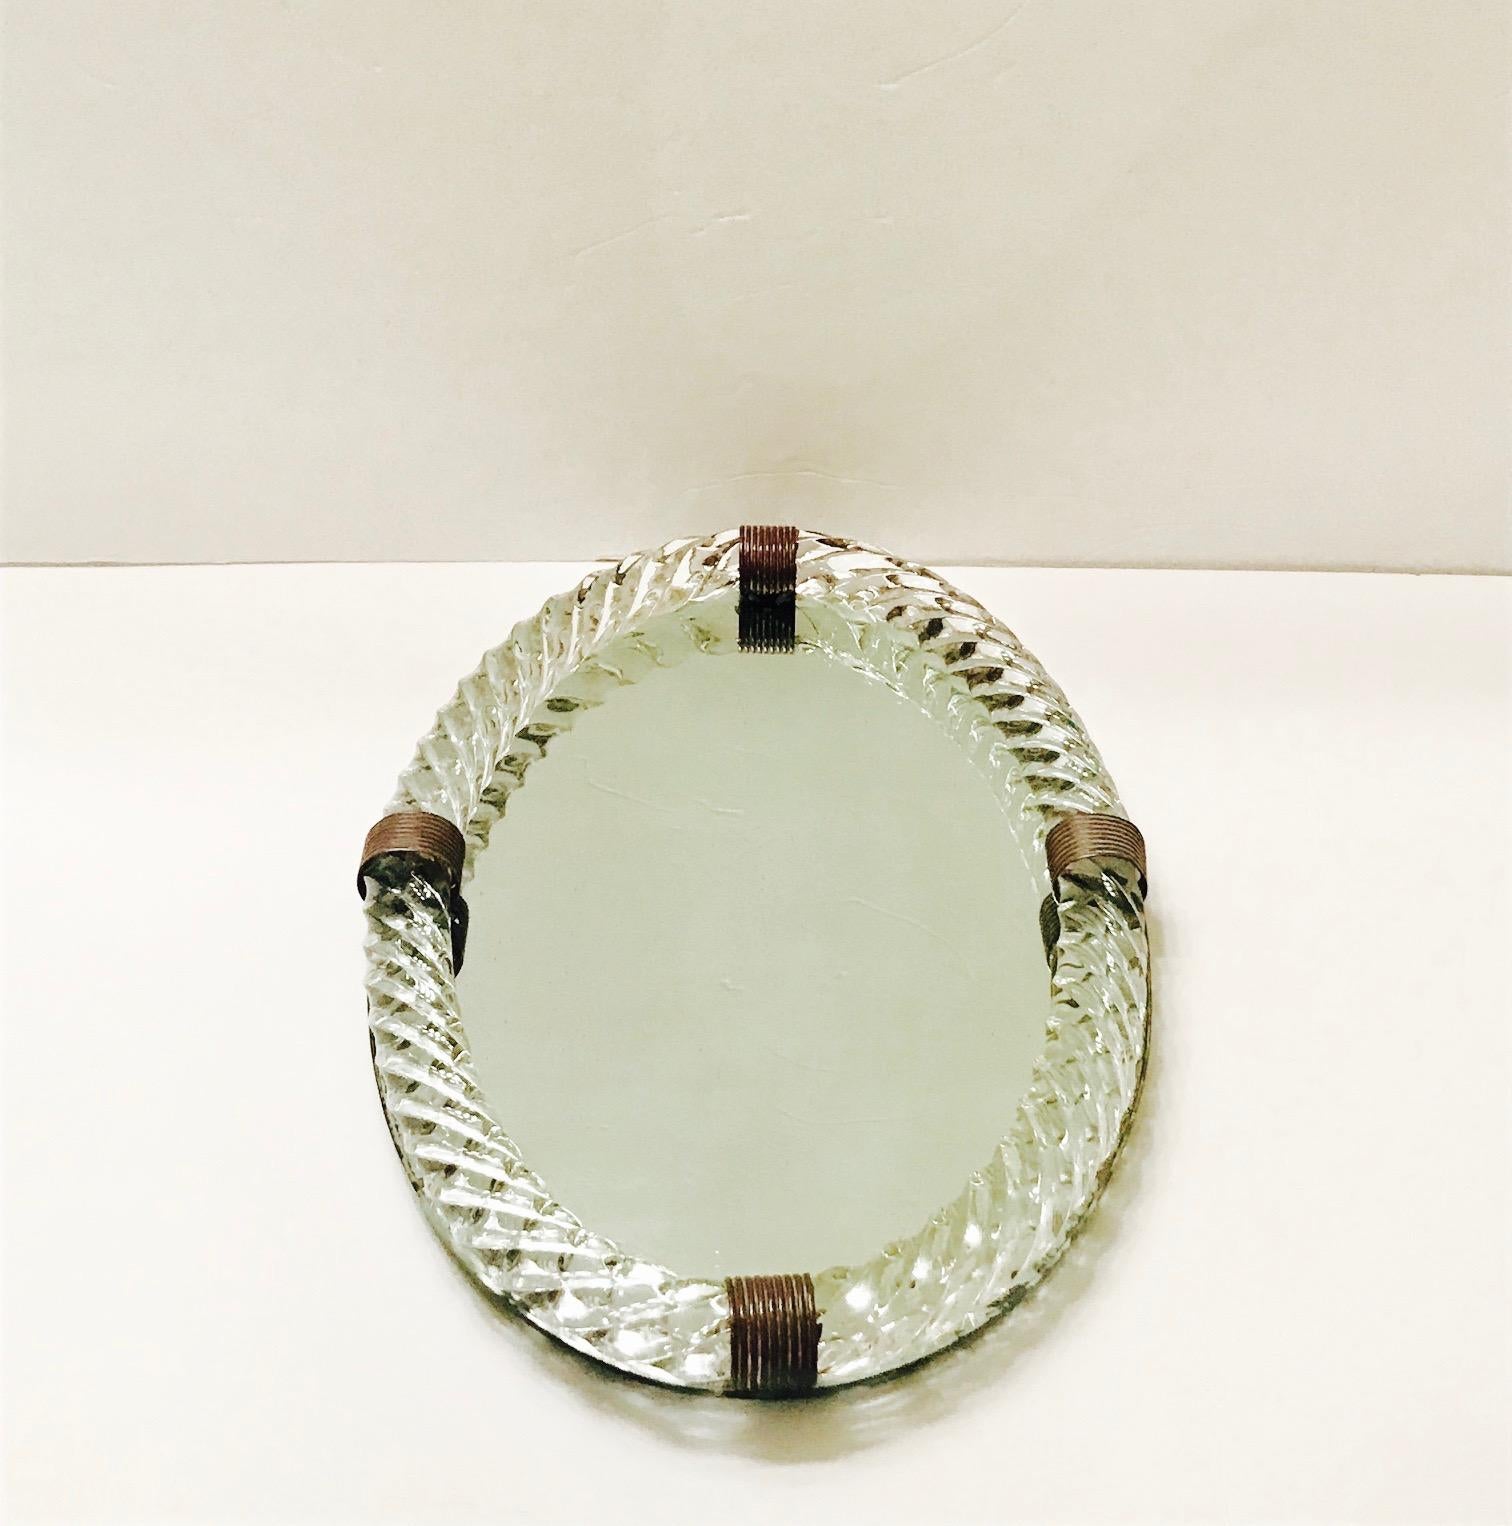 Italian 1940s Mirrored Vanity Tray with Murano Glass Rope Gallery by Venini